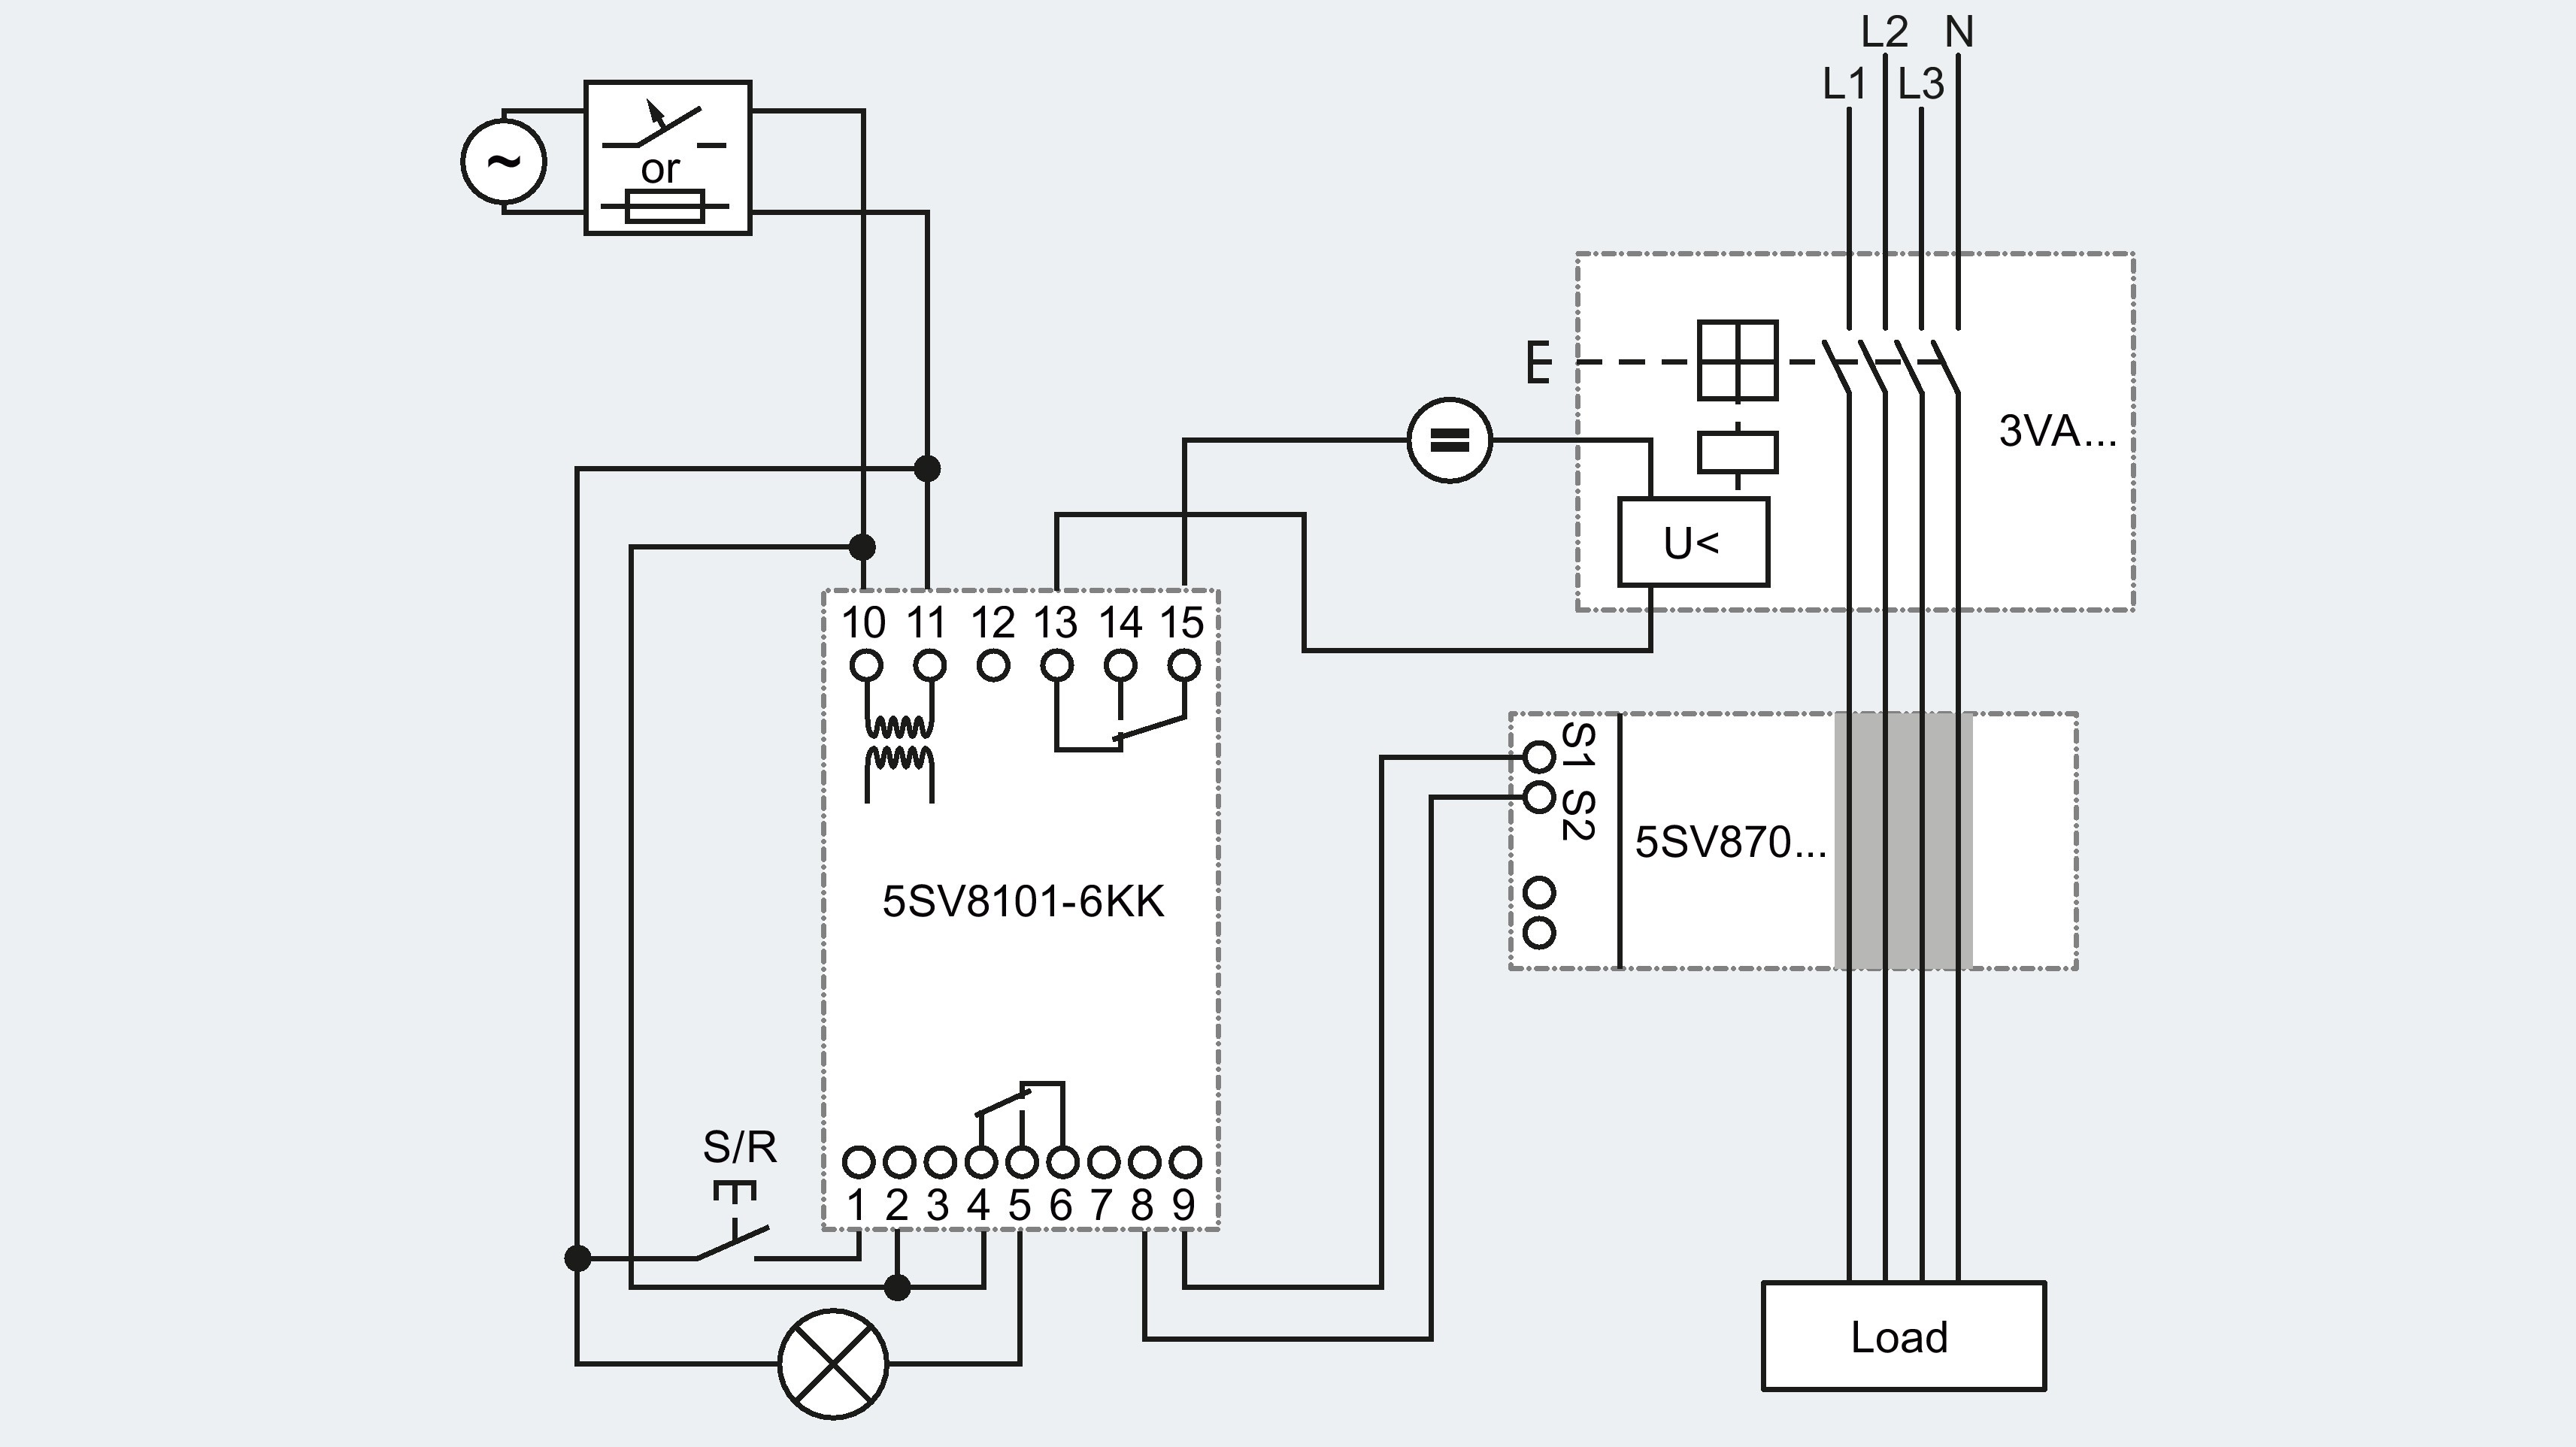 Aircraft Inter Wiring Diagram Save Siemens Shunt Trip Breaker Wiring Diagram Wiring